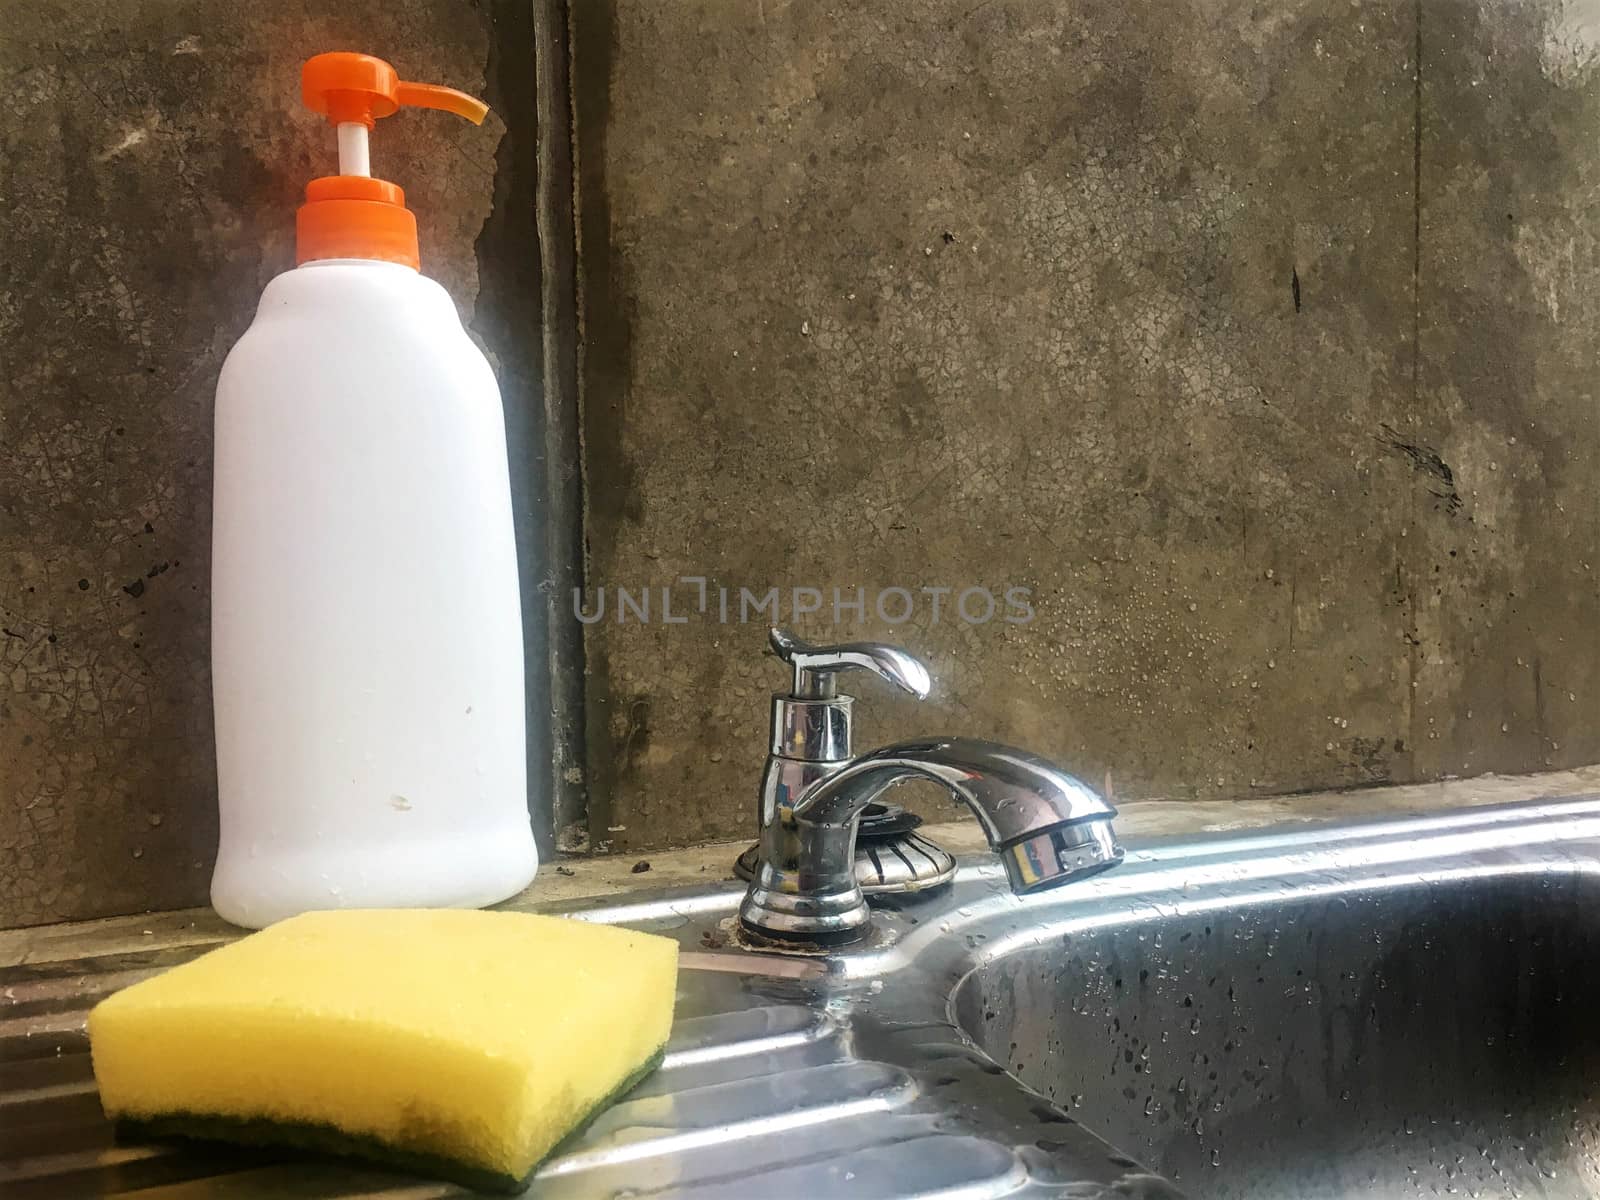 Sponge for washing dishes by e22xua